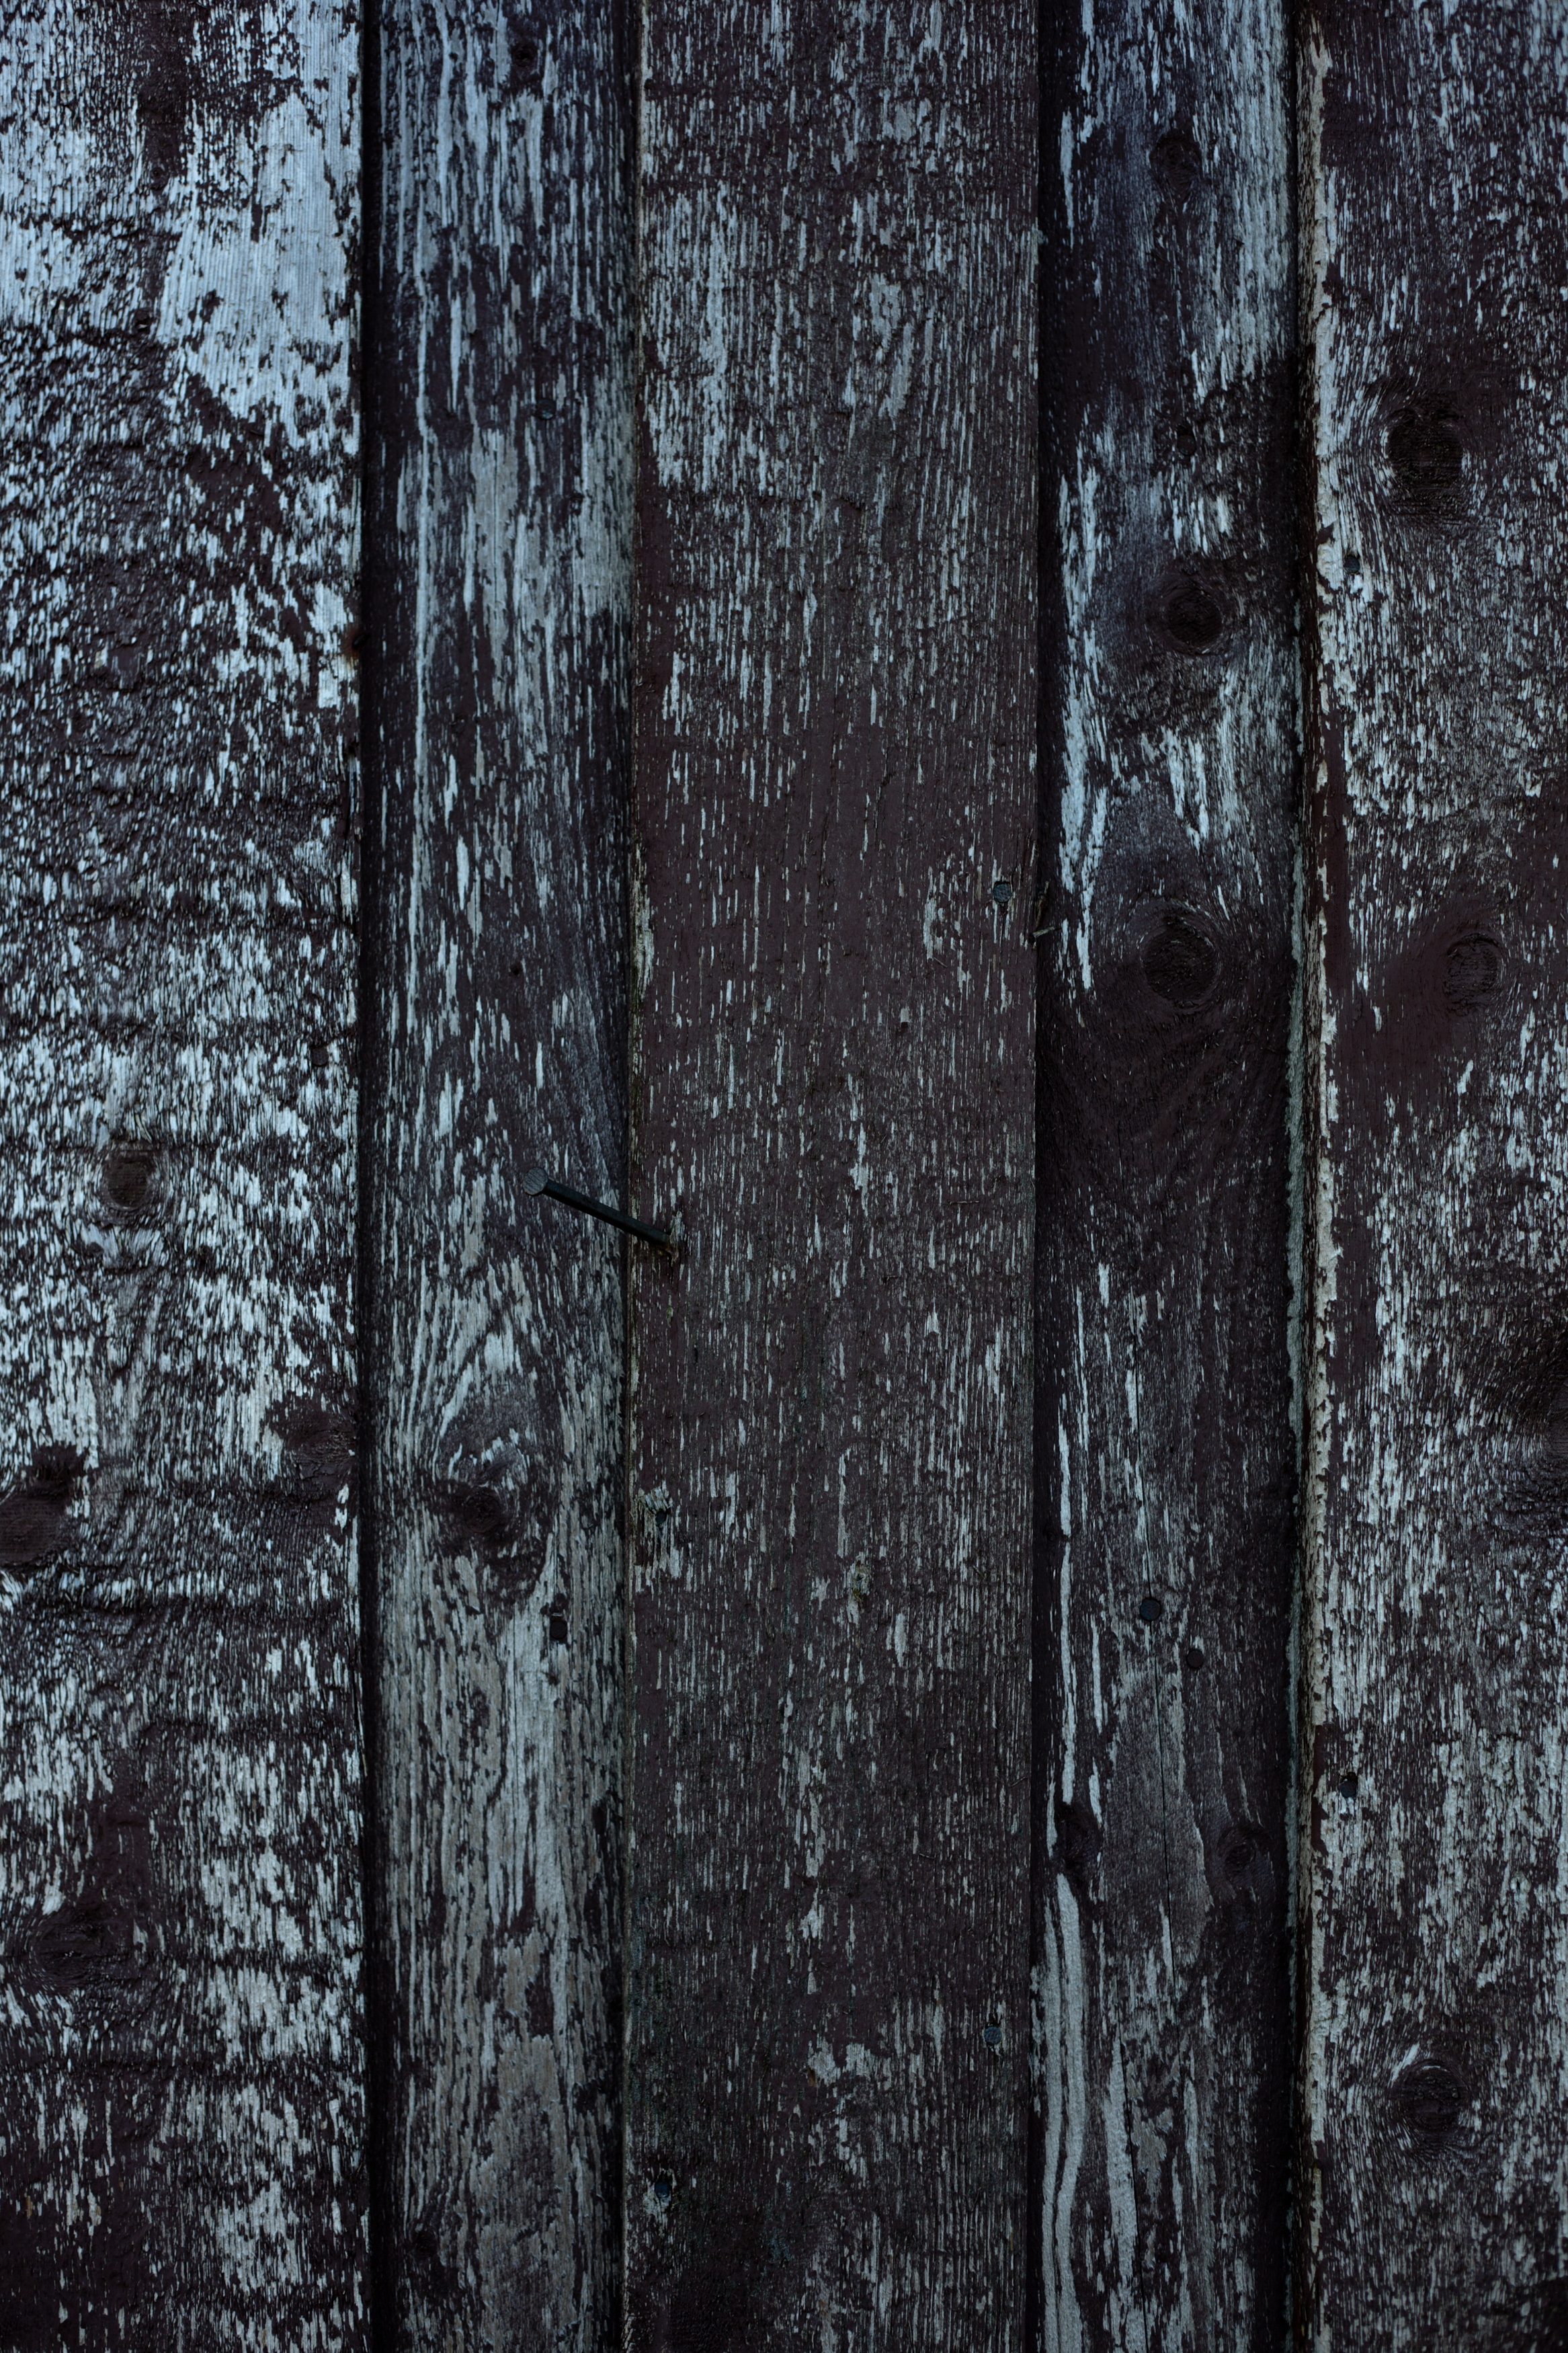 Worn Wood Panel, Dry, Freetexturefrida, Grunge, Grungy, HQ Photo